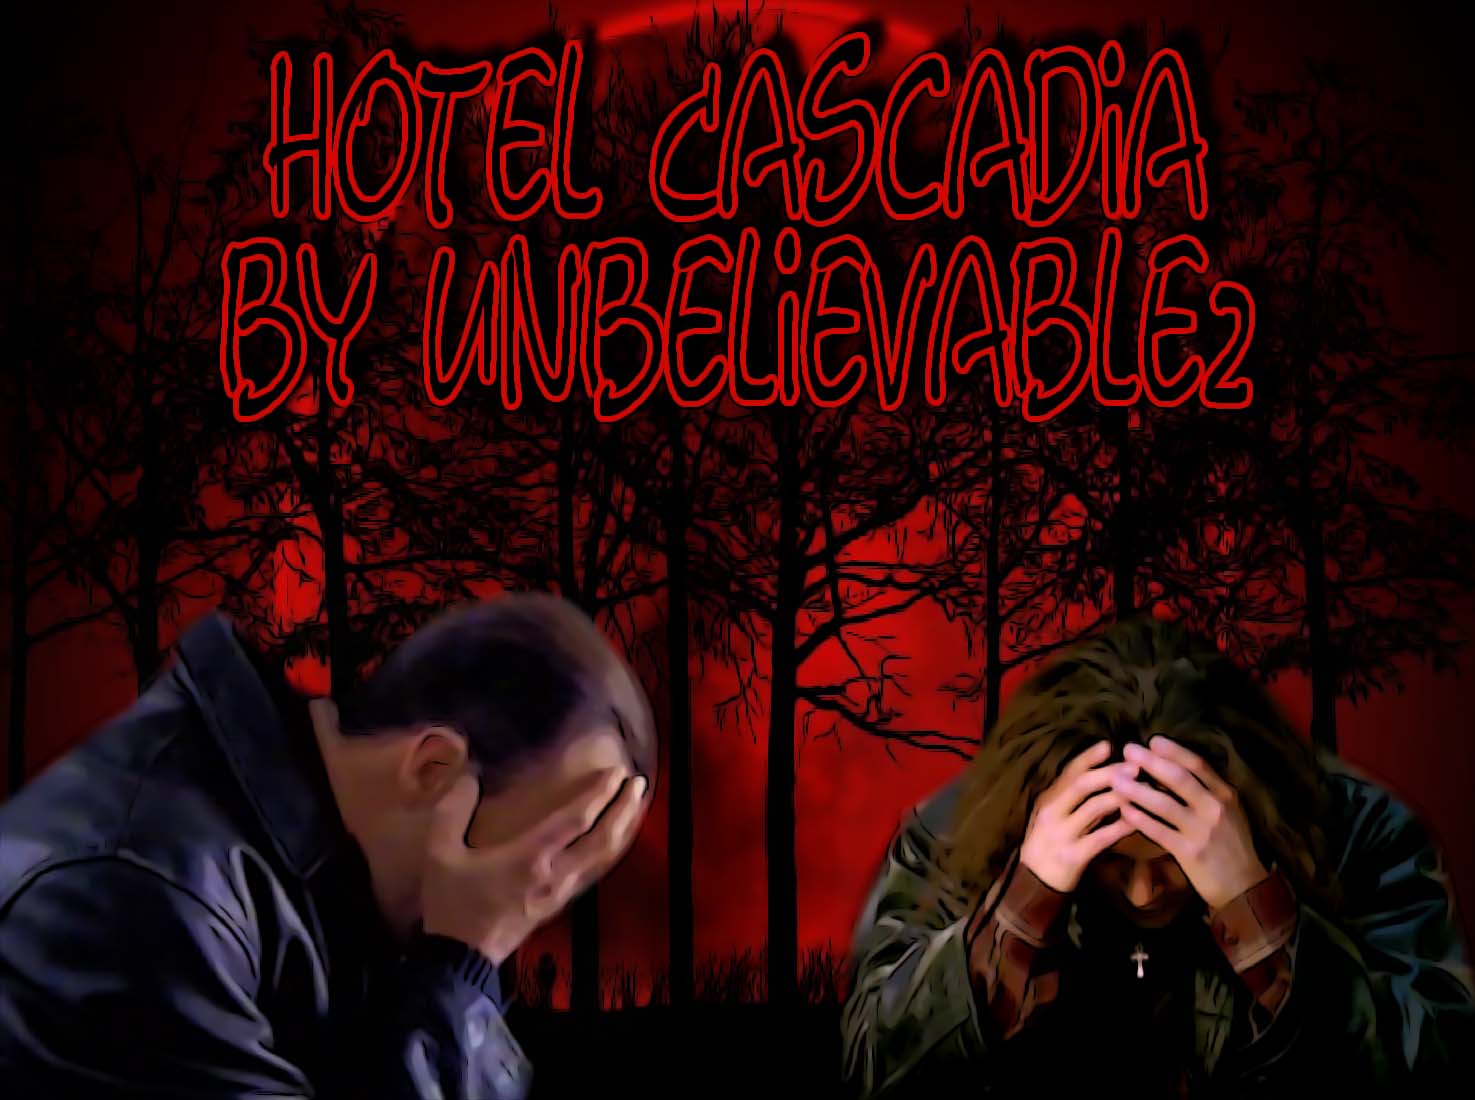 Hotel Cascadia by unbelievable2, art by PattRose